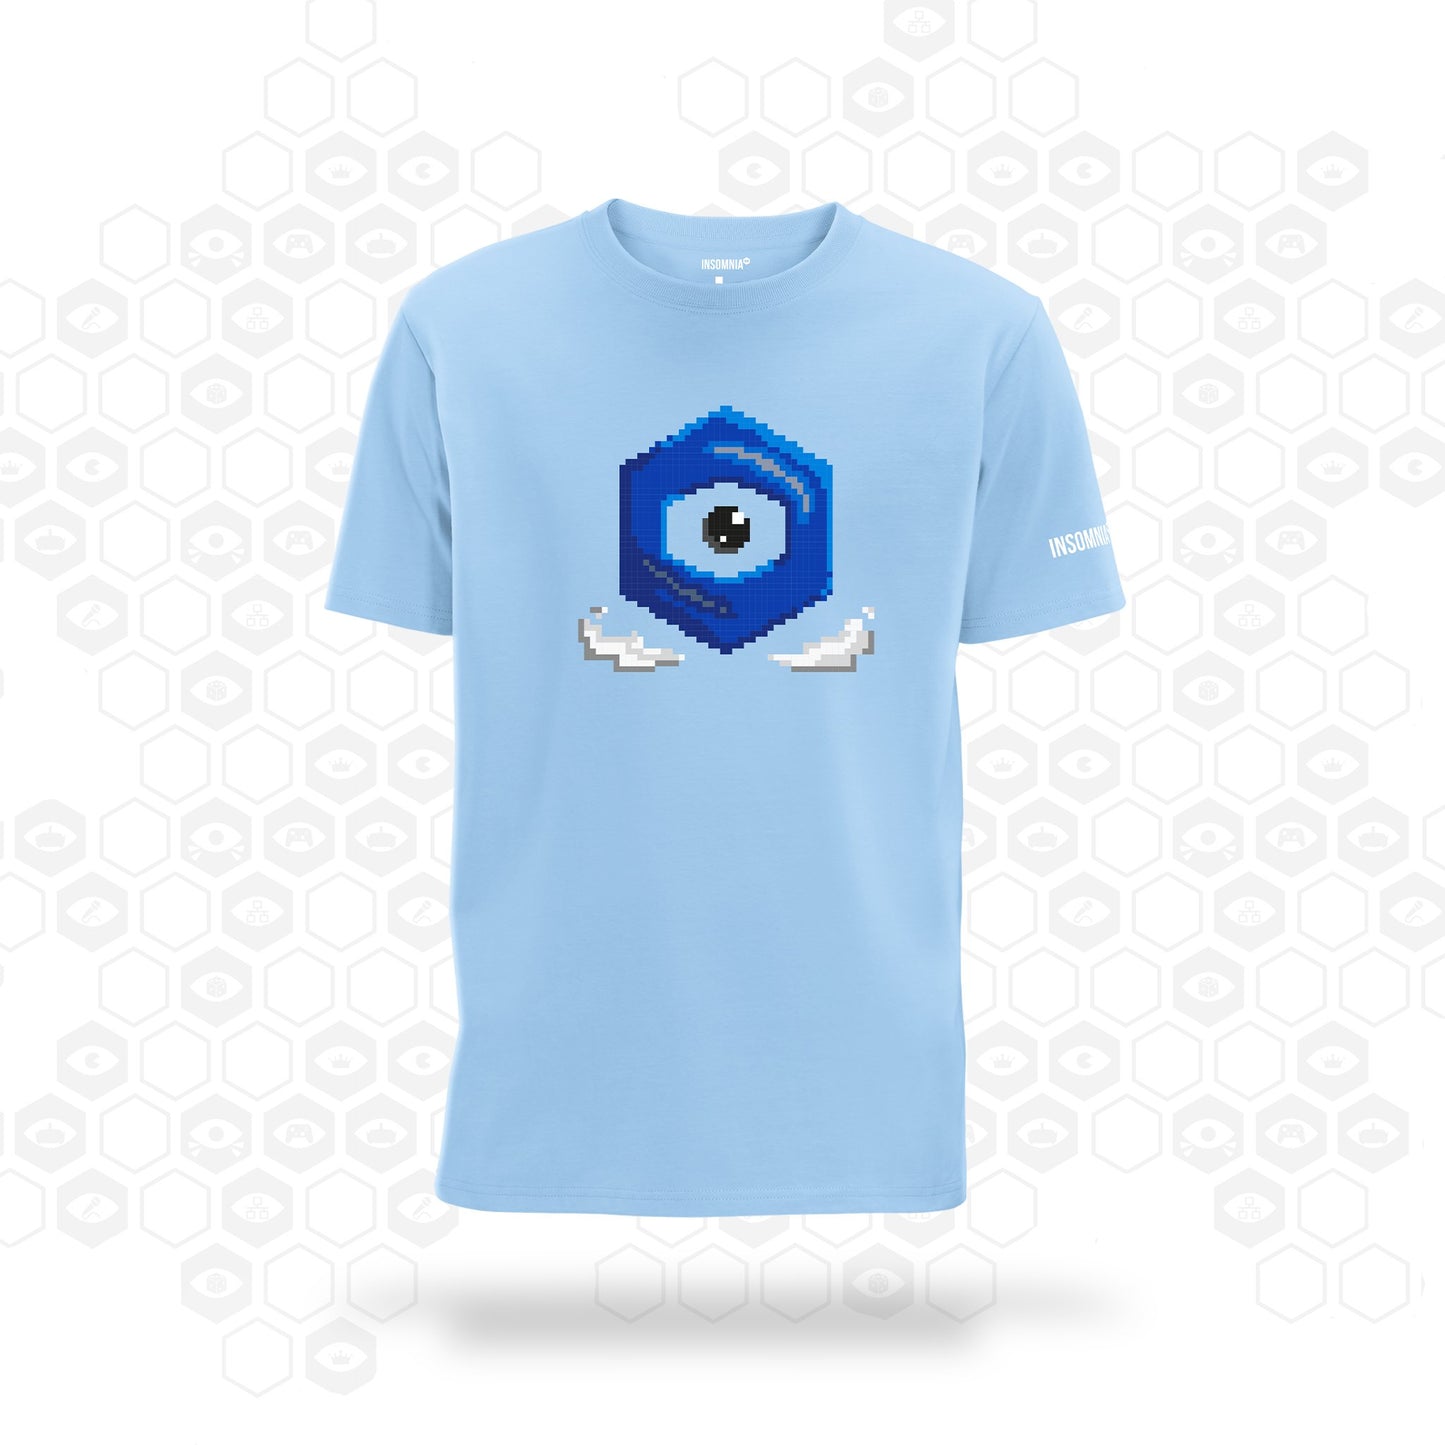 Light blue Insomnia 8-bit Spin dash t-shirt